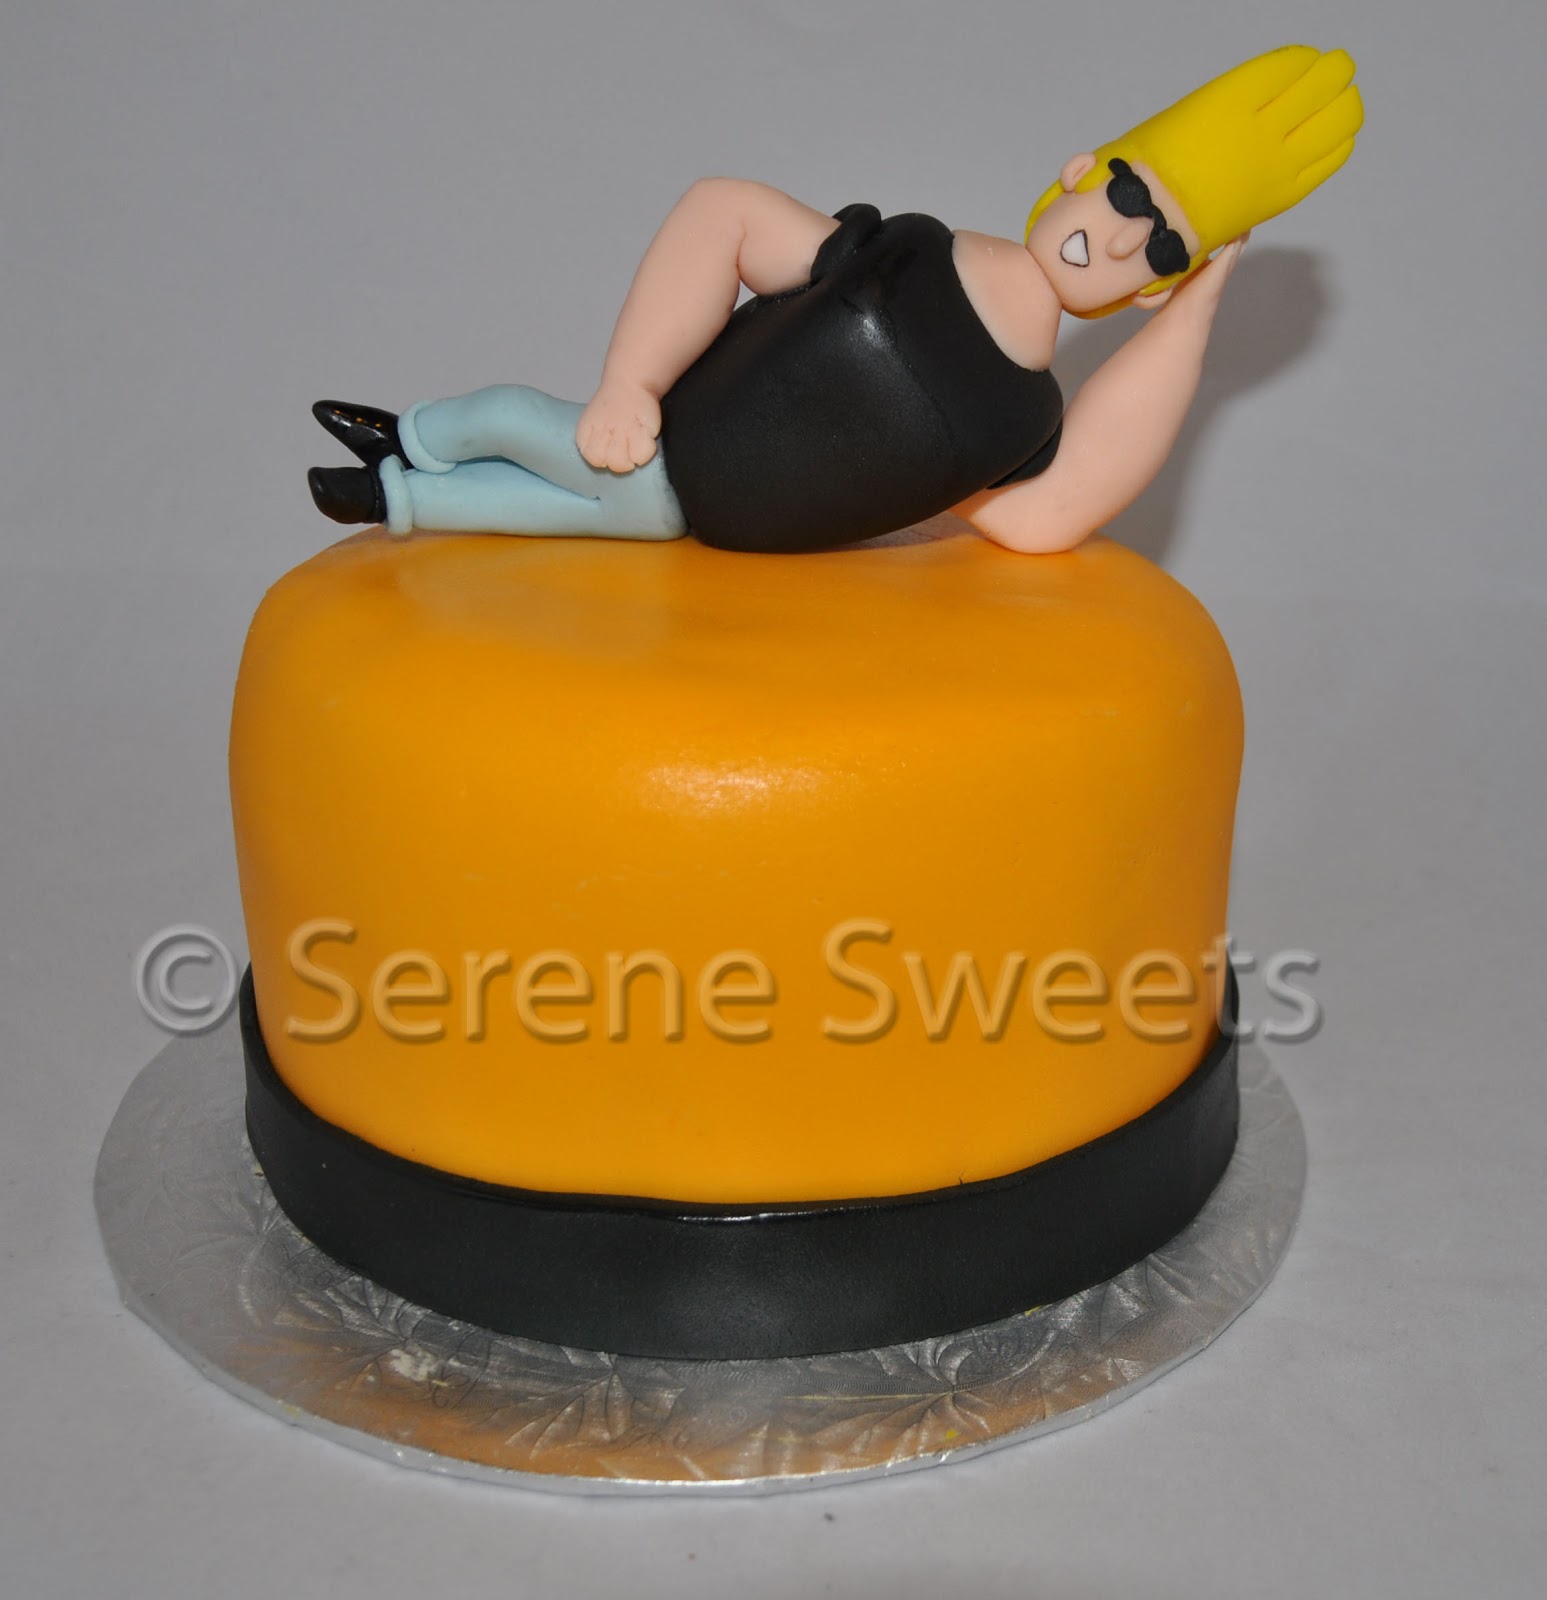 Serene Sweets: Johnny Bravo Cake